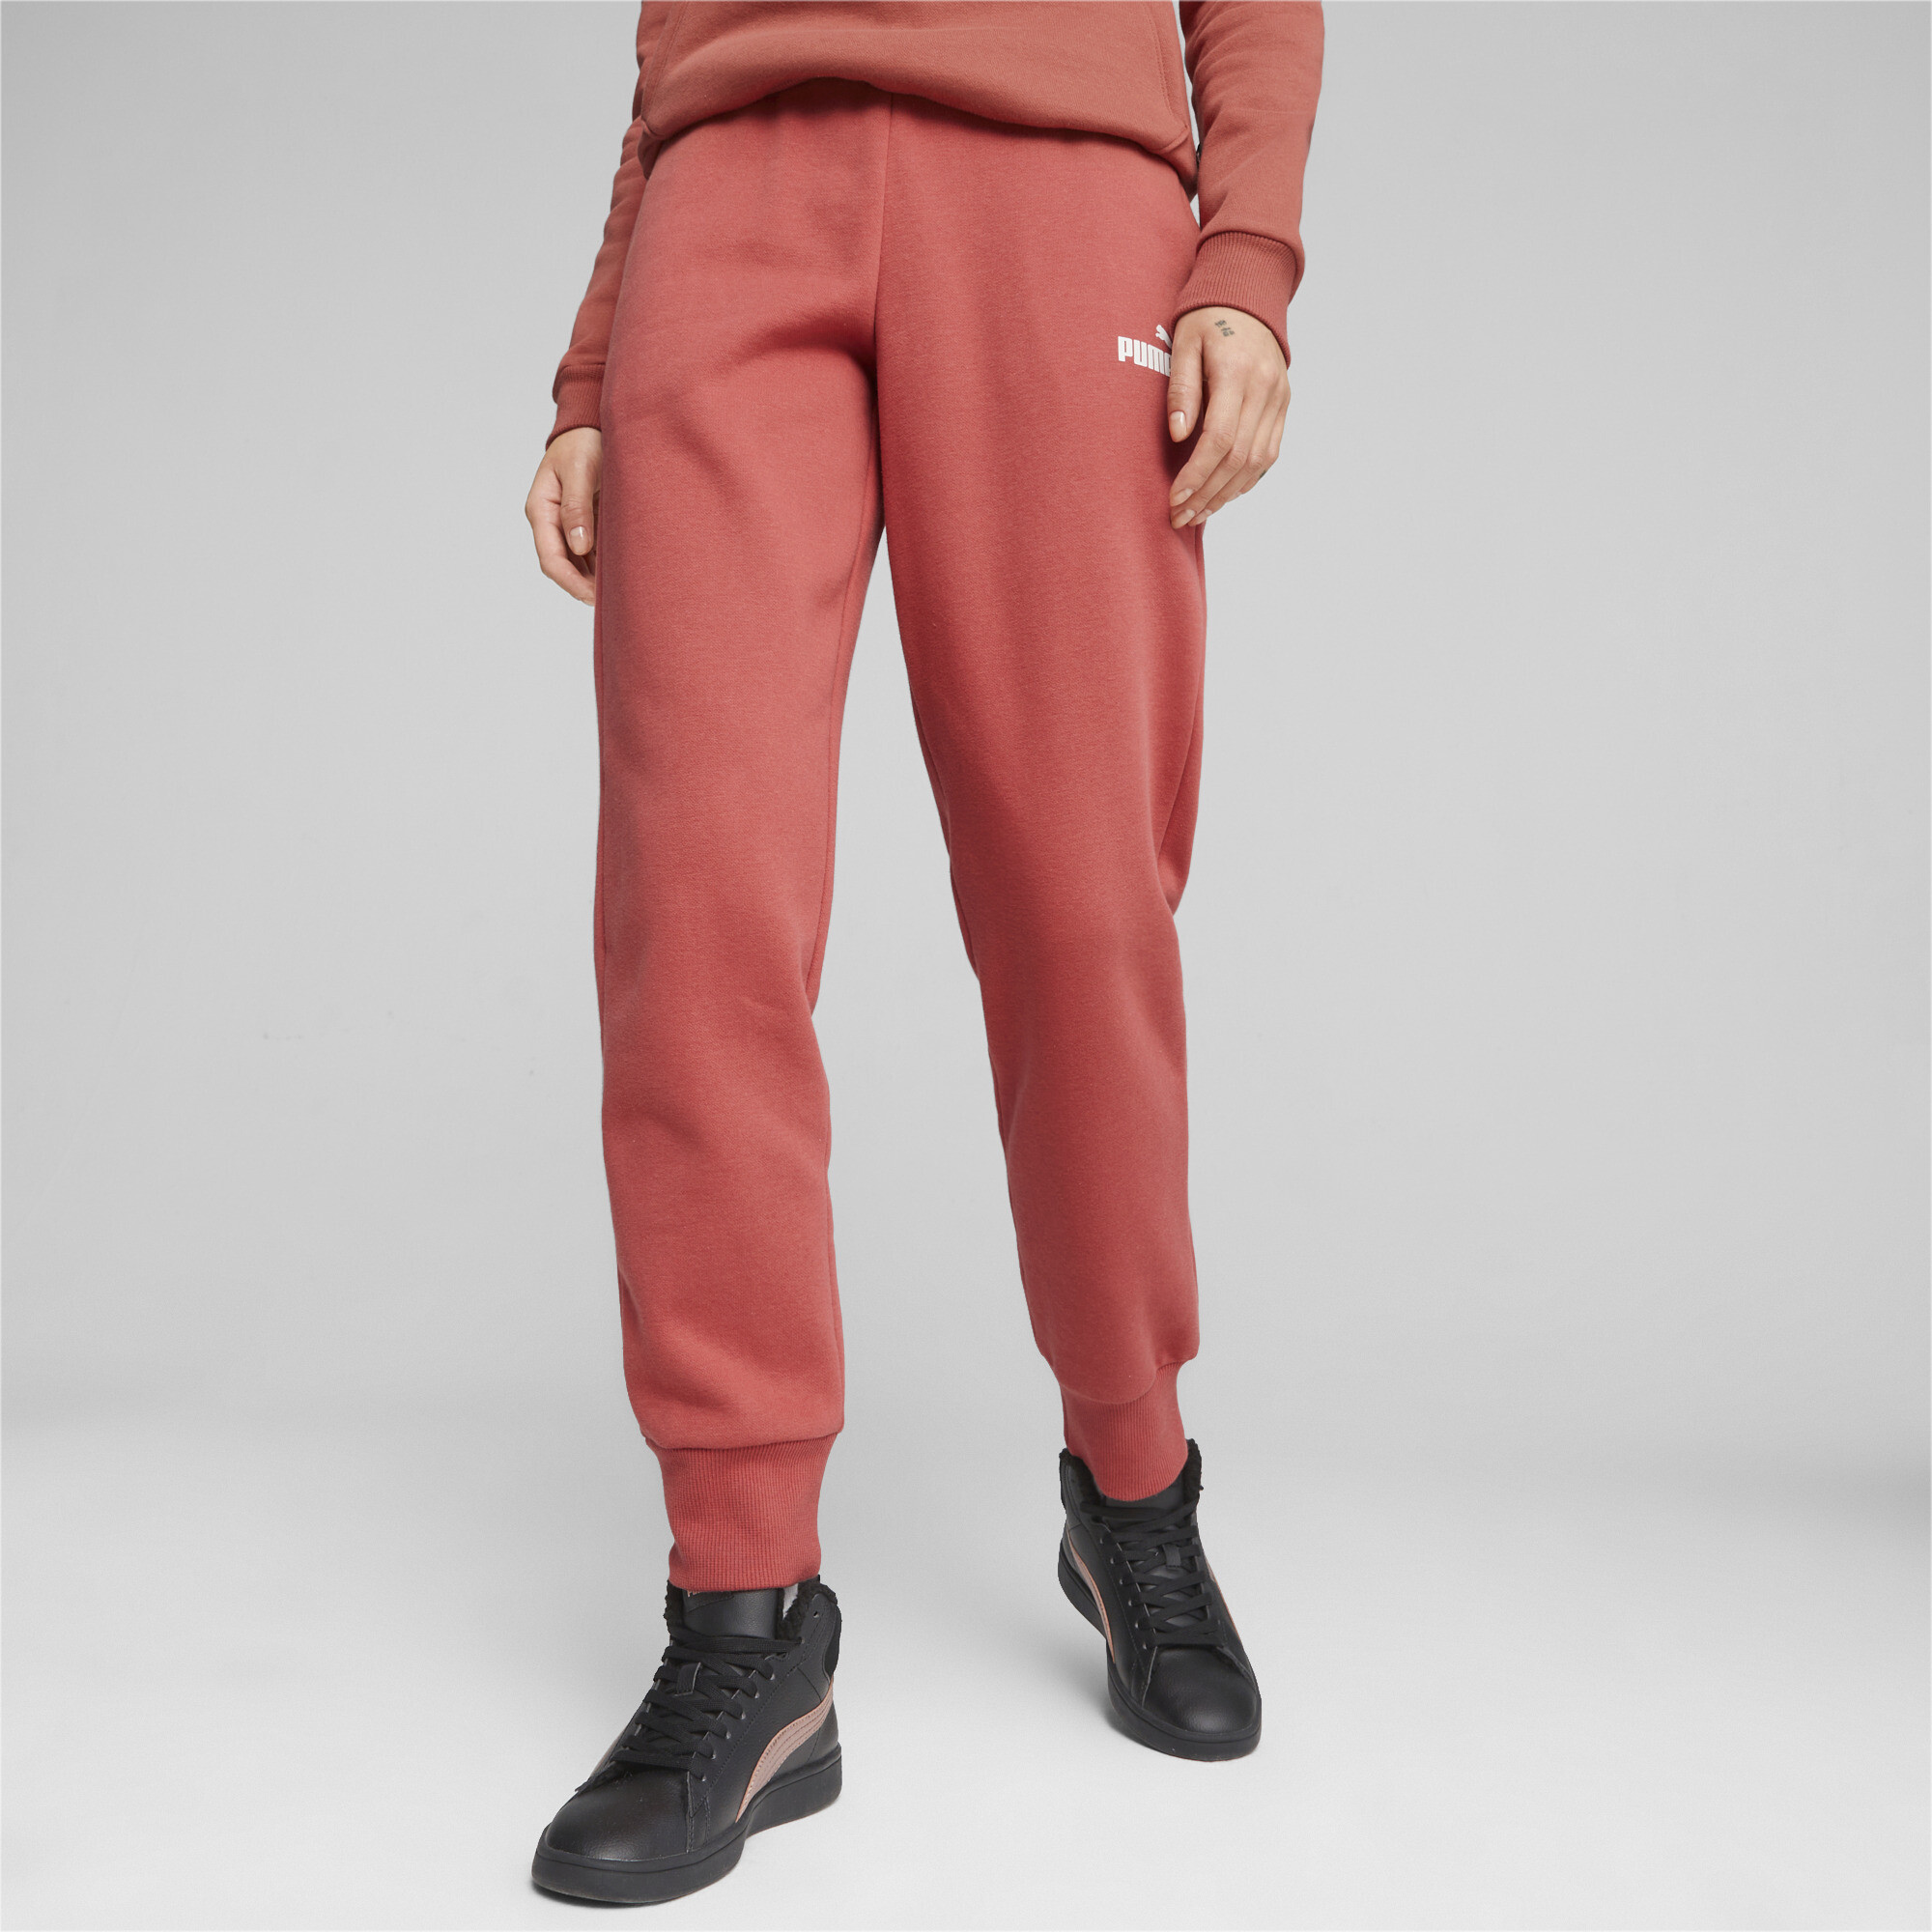 Women's Puma Essentials's Sweatpants, Red, Size 3XL, Clothing